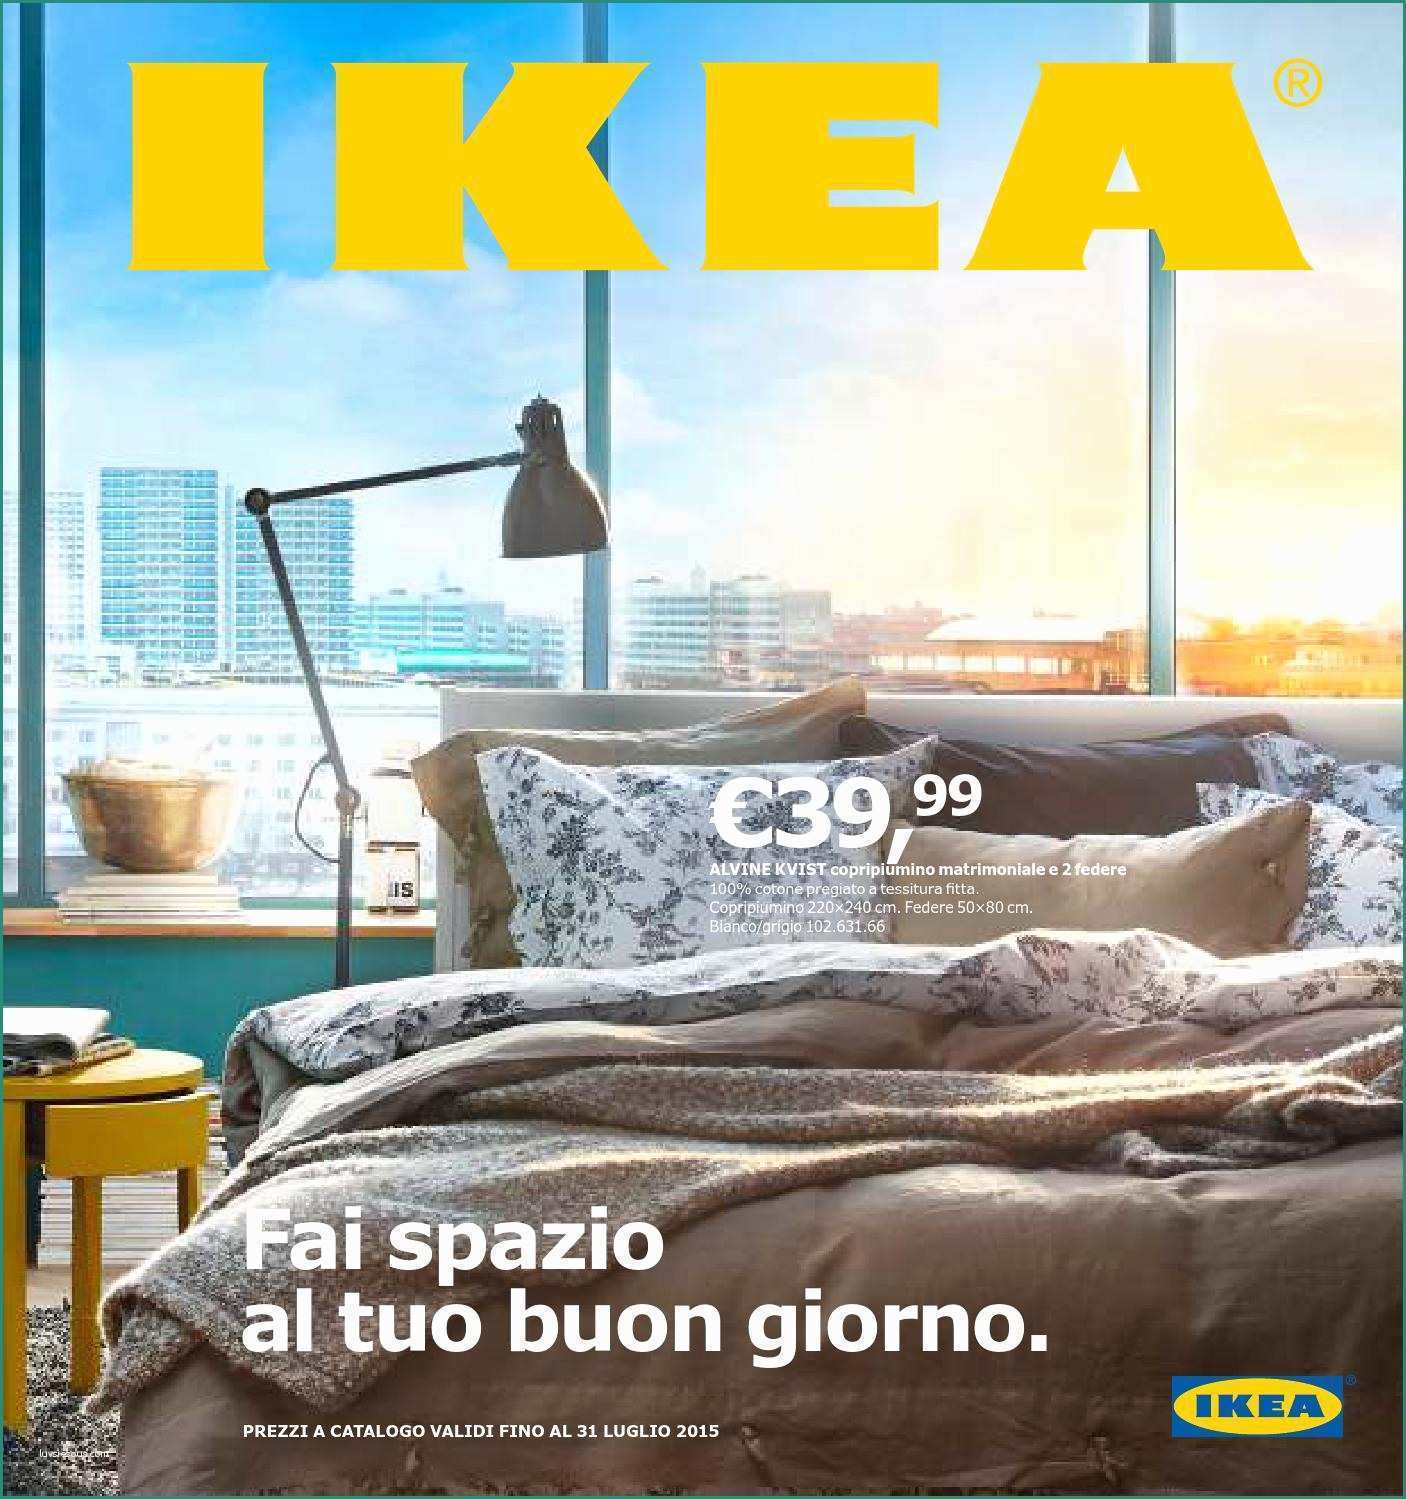 Divano Posti Misure E Ikea 31lug15 by Volantinoweb Vola issuu